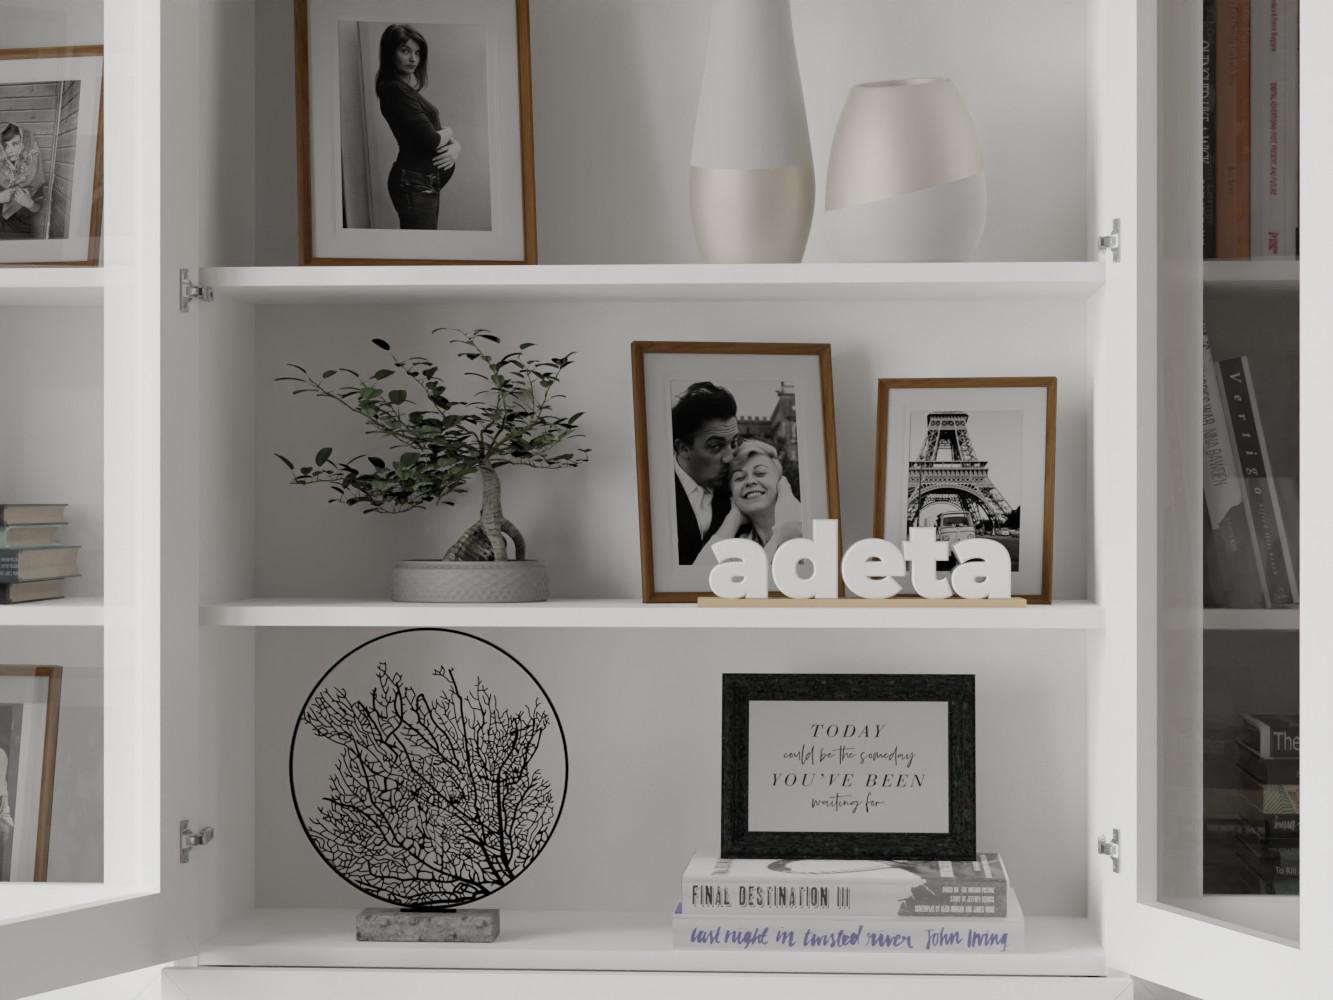 Книжный шкаф Билли 424 white ИКЕА (IKEA) изображение товара